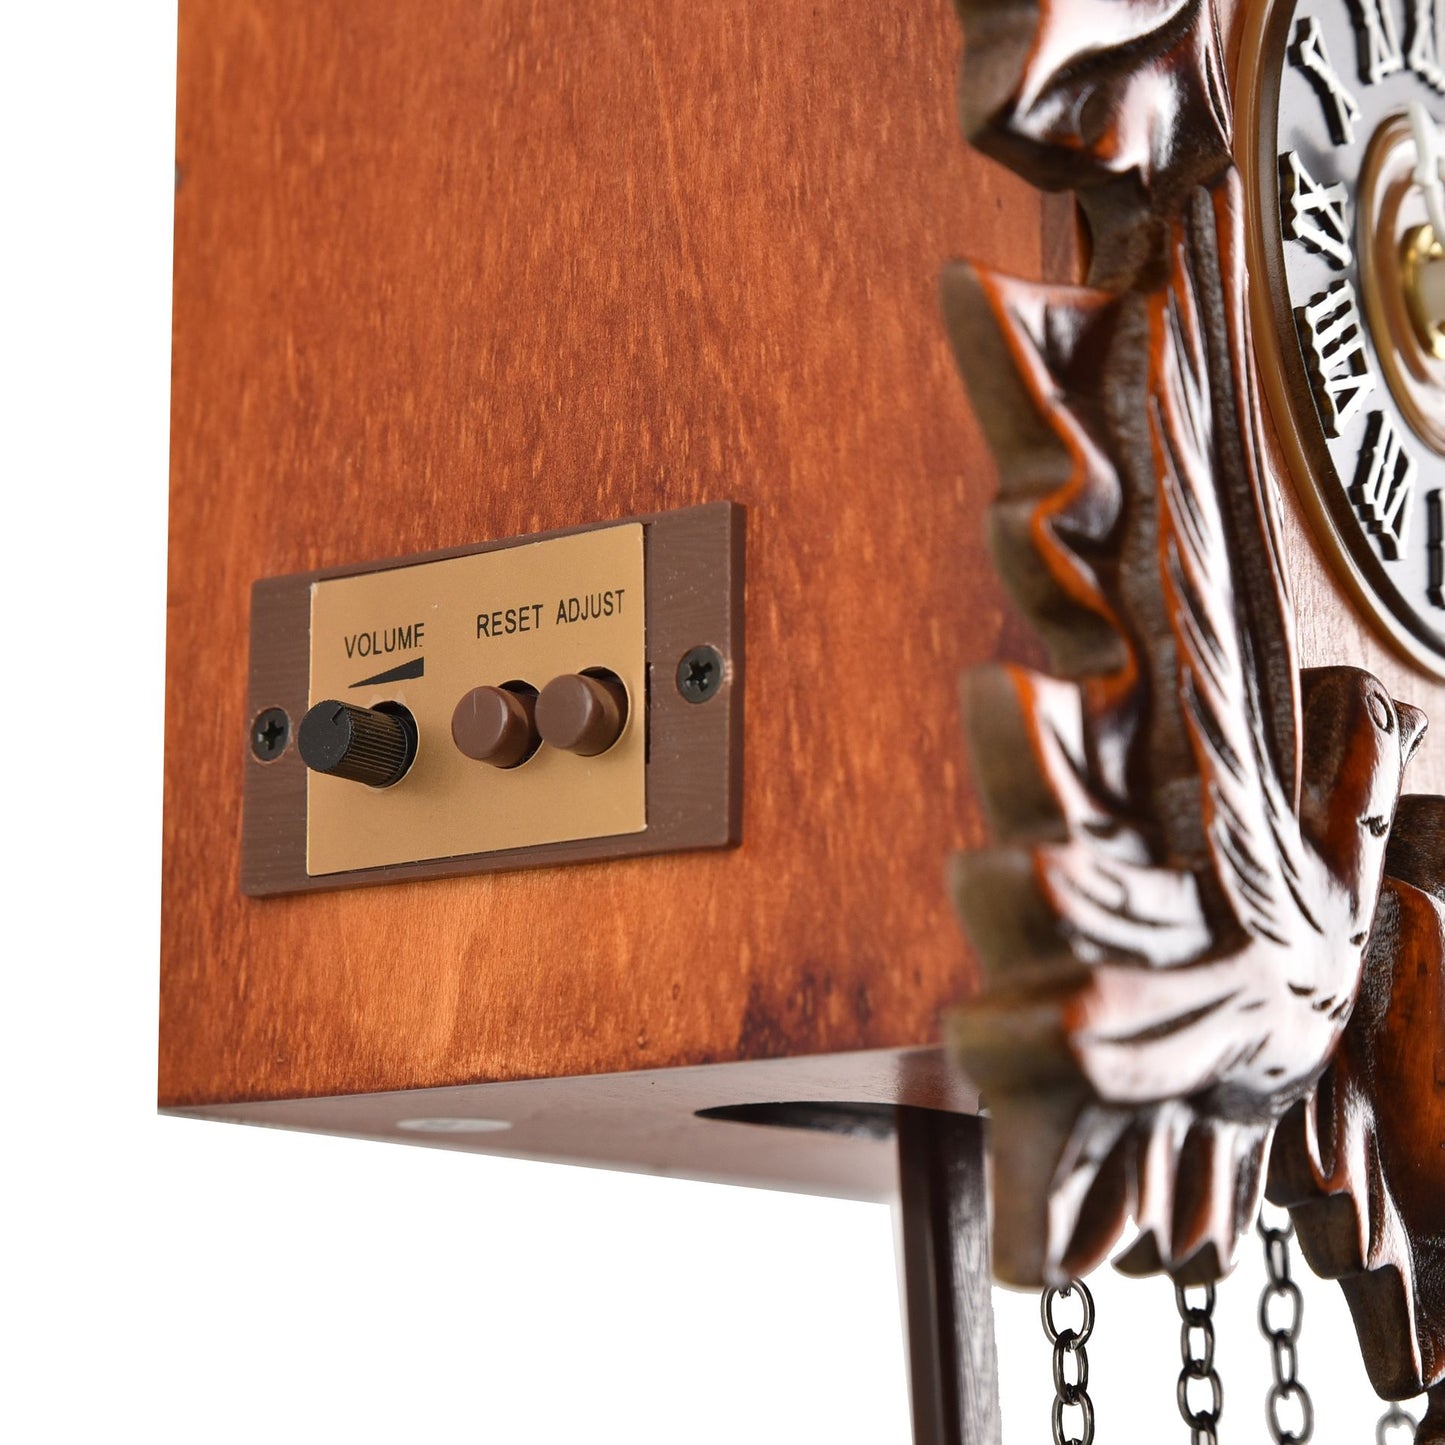 Traditional Cuckoo Wall Quartz Clock by Widdop & Bingham